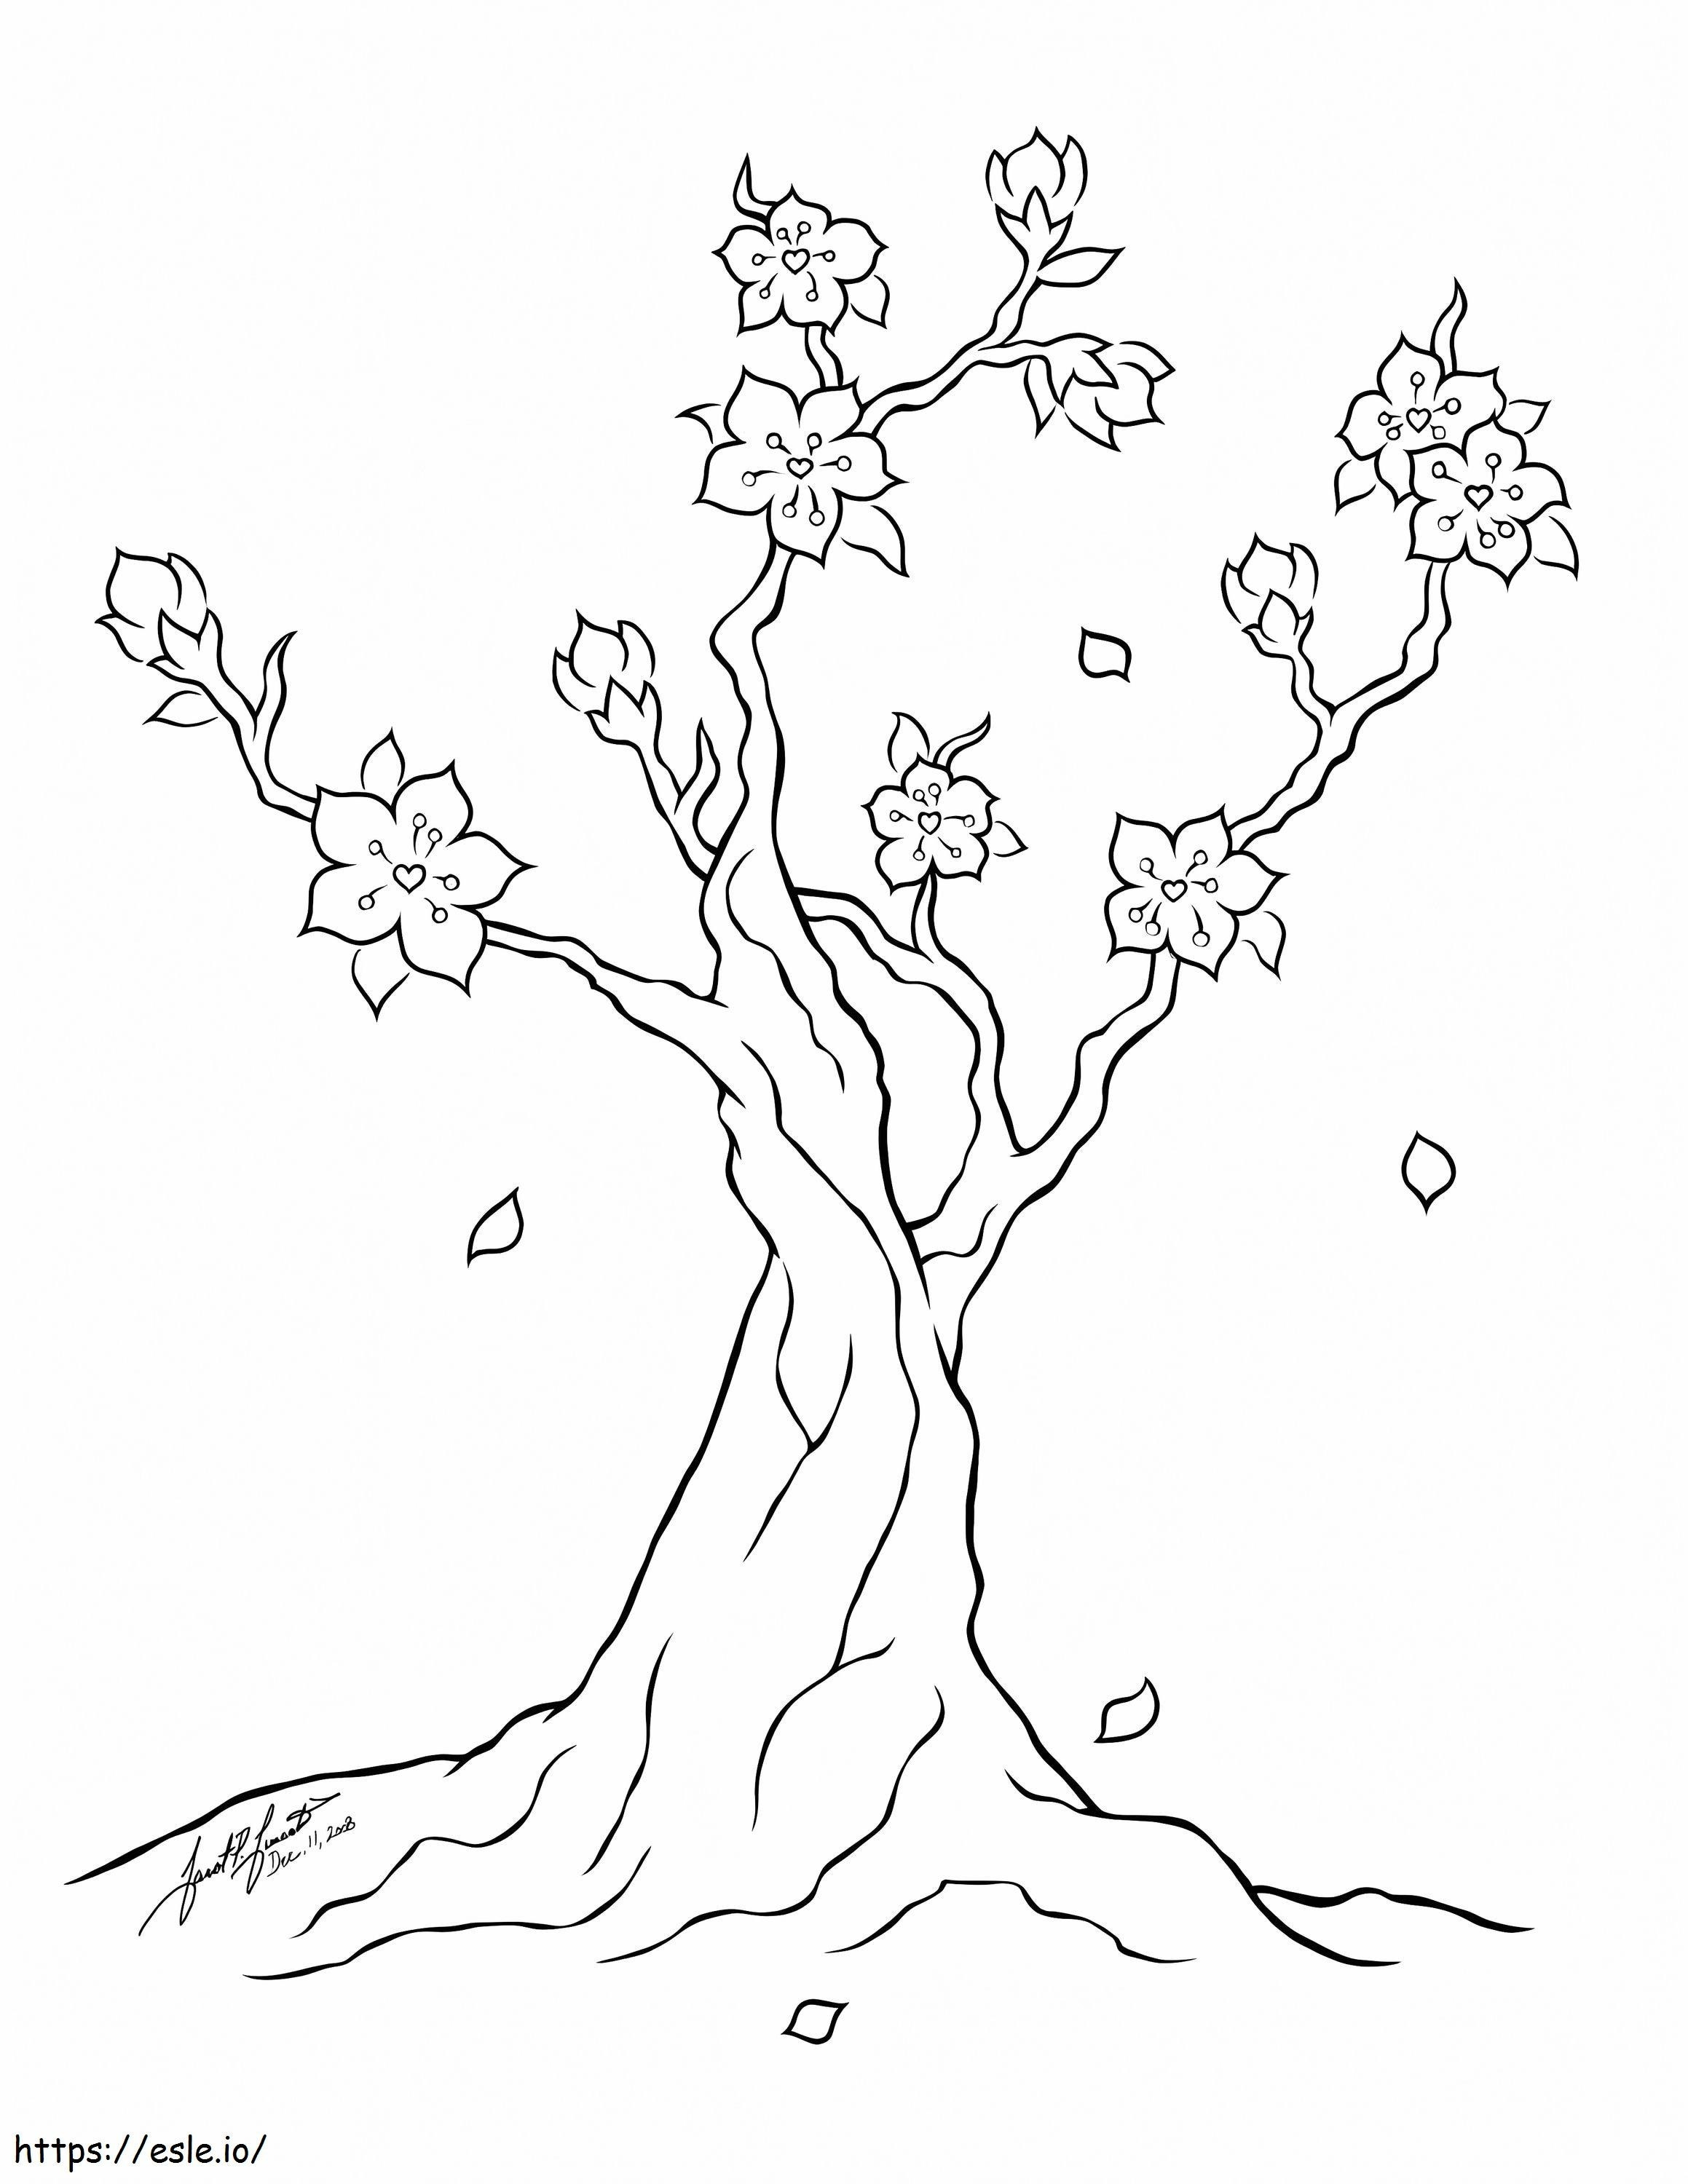 Un árbol de flor de cerezo para colorear